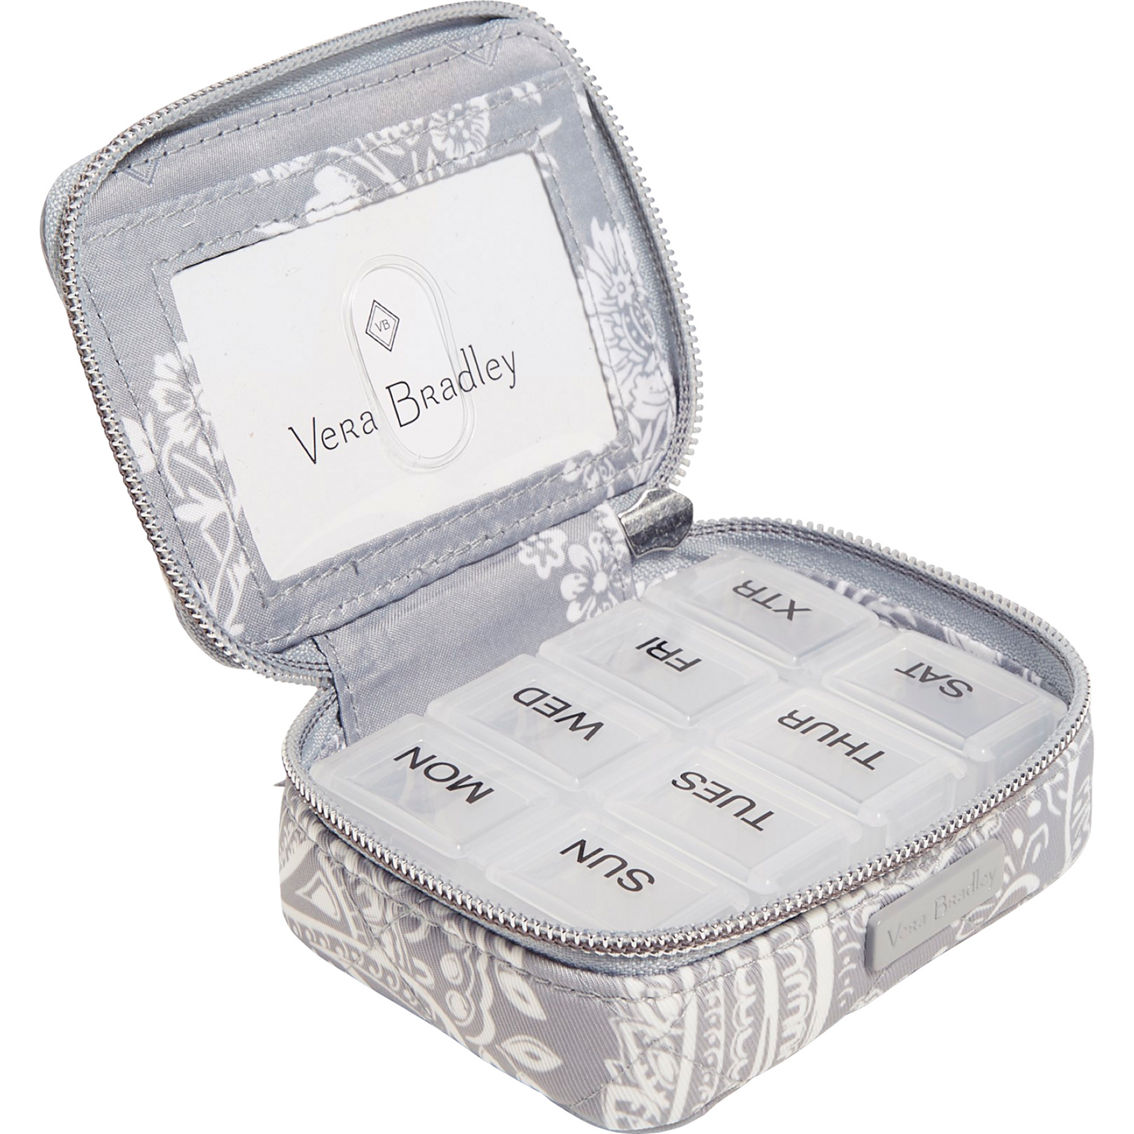 Vera Bradley Travel Pill Case, Cloud Gray Paisley - Image 2 of 2